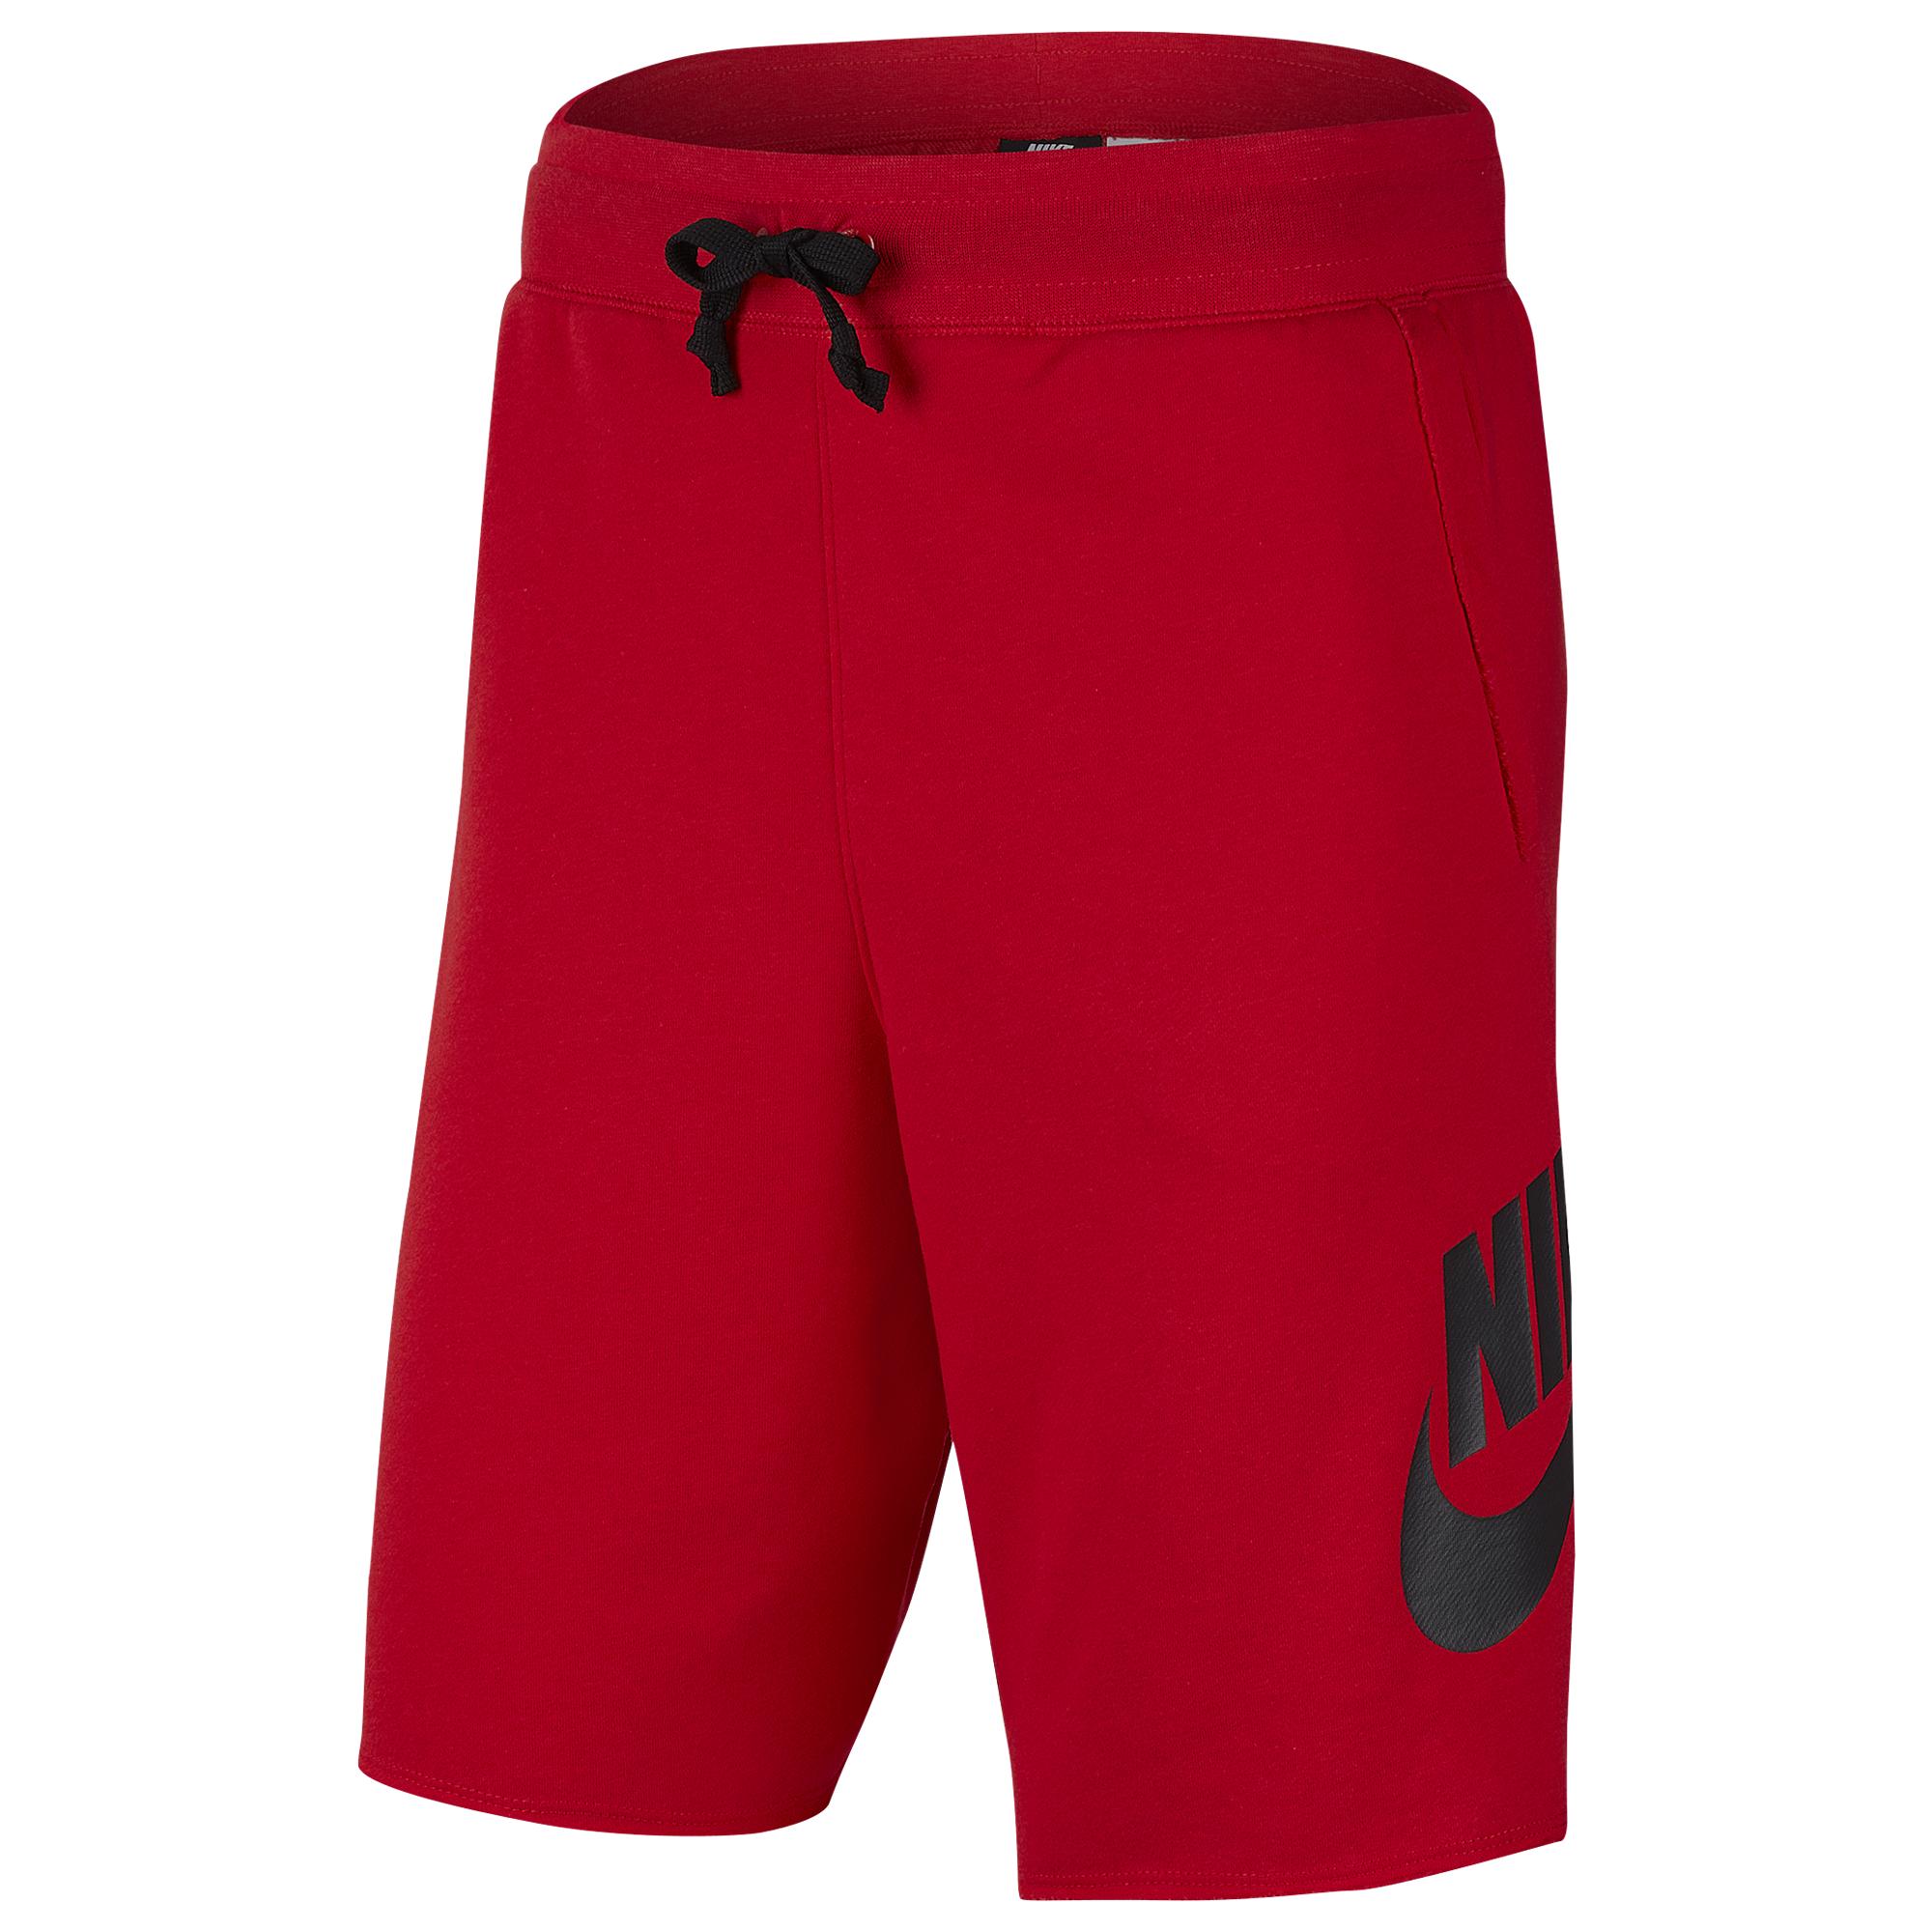 Nike Alumni Shorts in Red for Men - Lyst